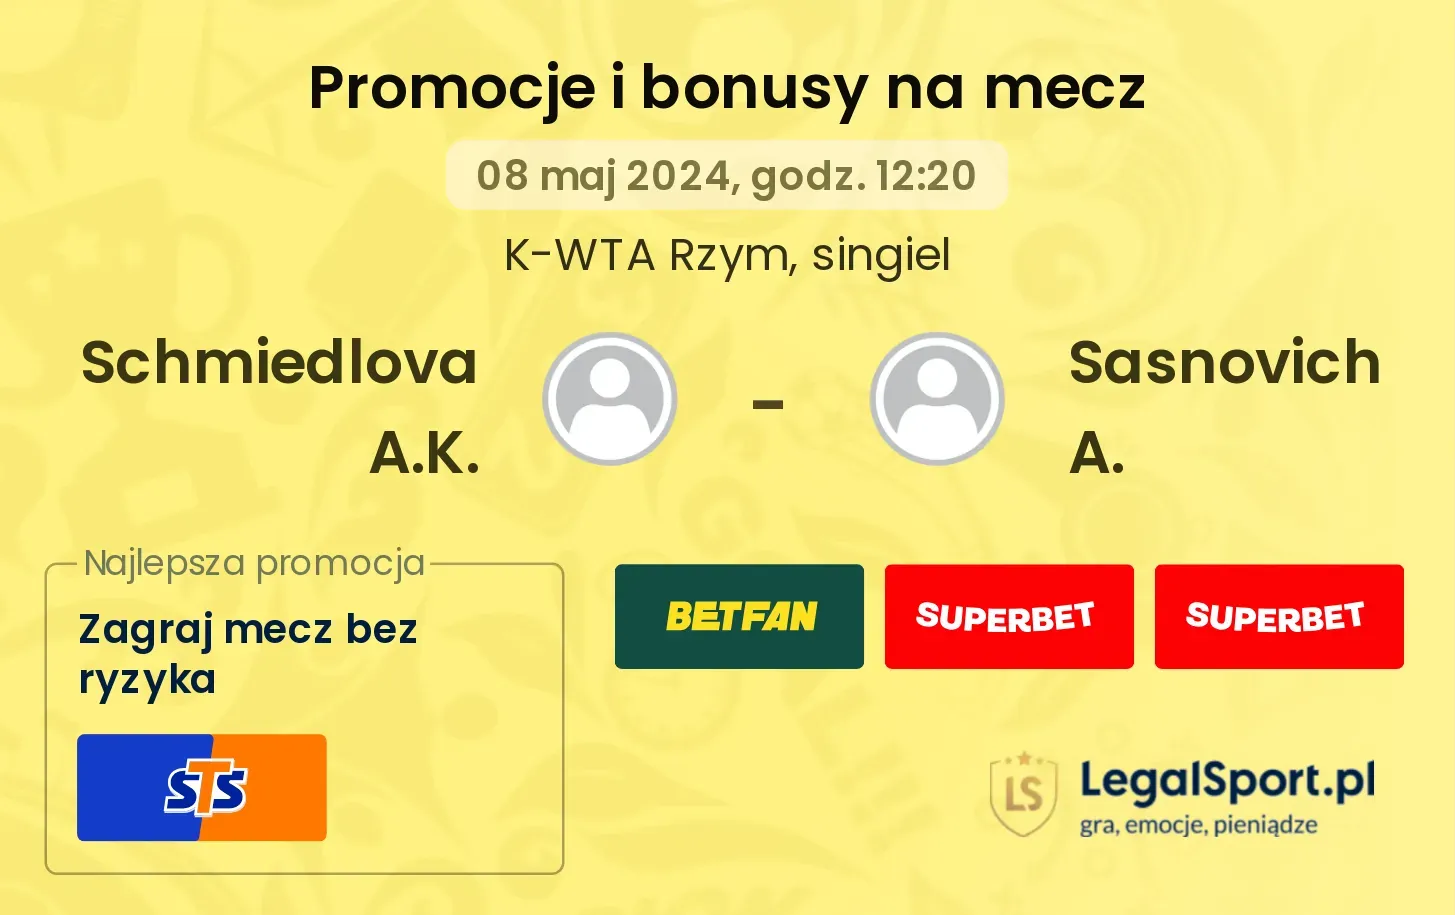 Schmiedlova A.K. - Sasnovich A. promocje bonusy na mecz